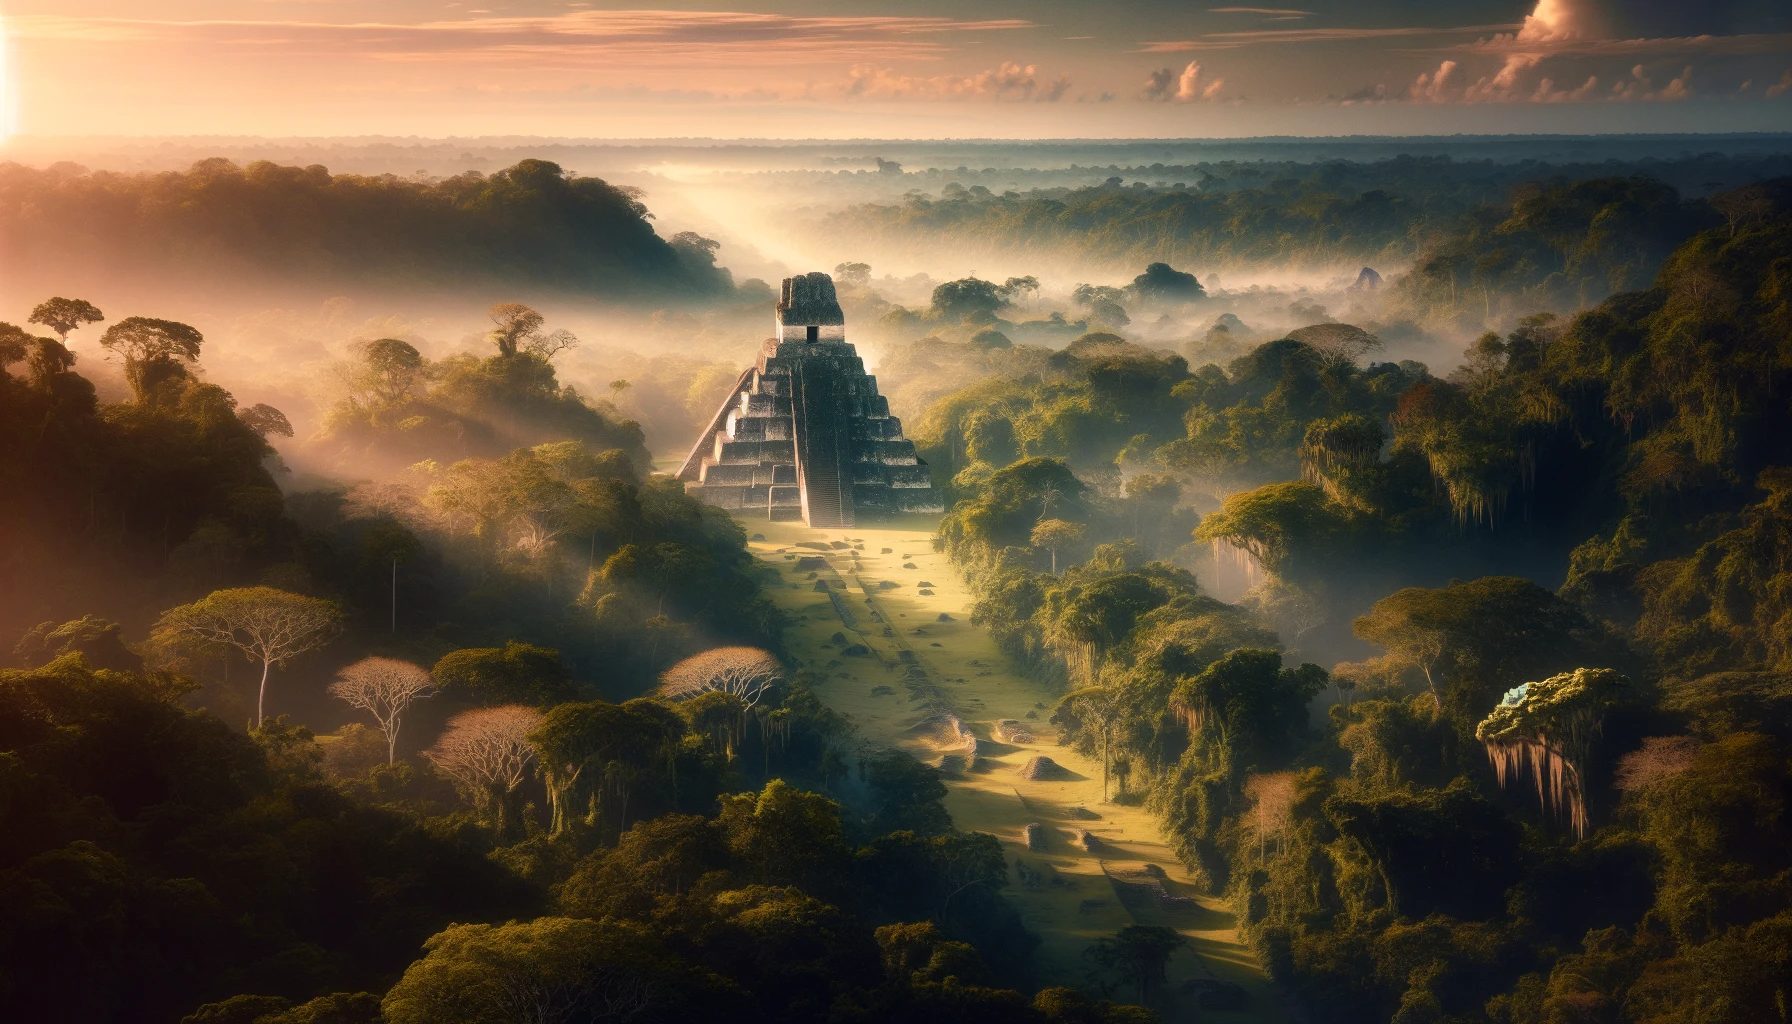 Ancient pyramid amidst misty tropical rainforest at sunrise.